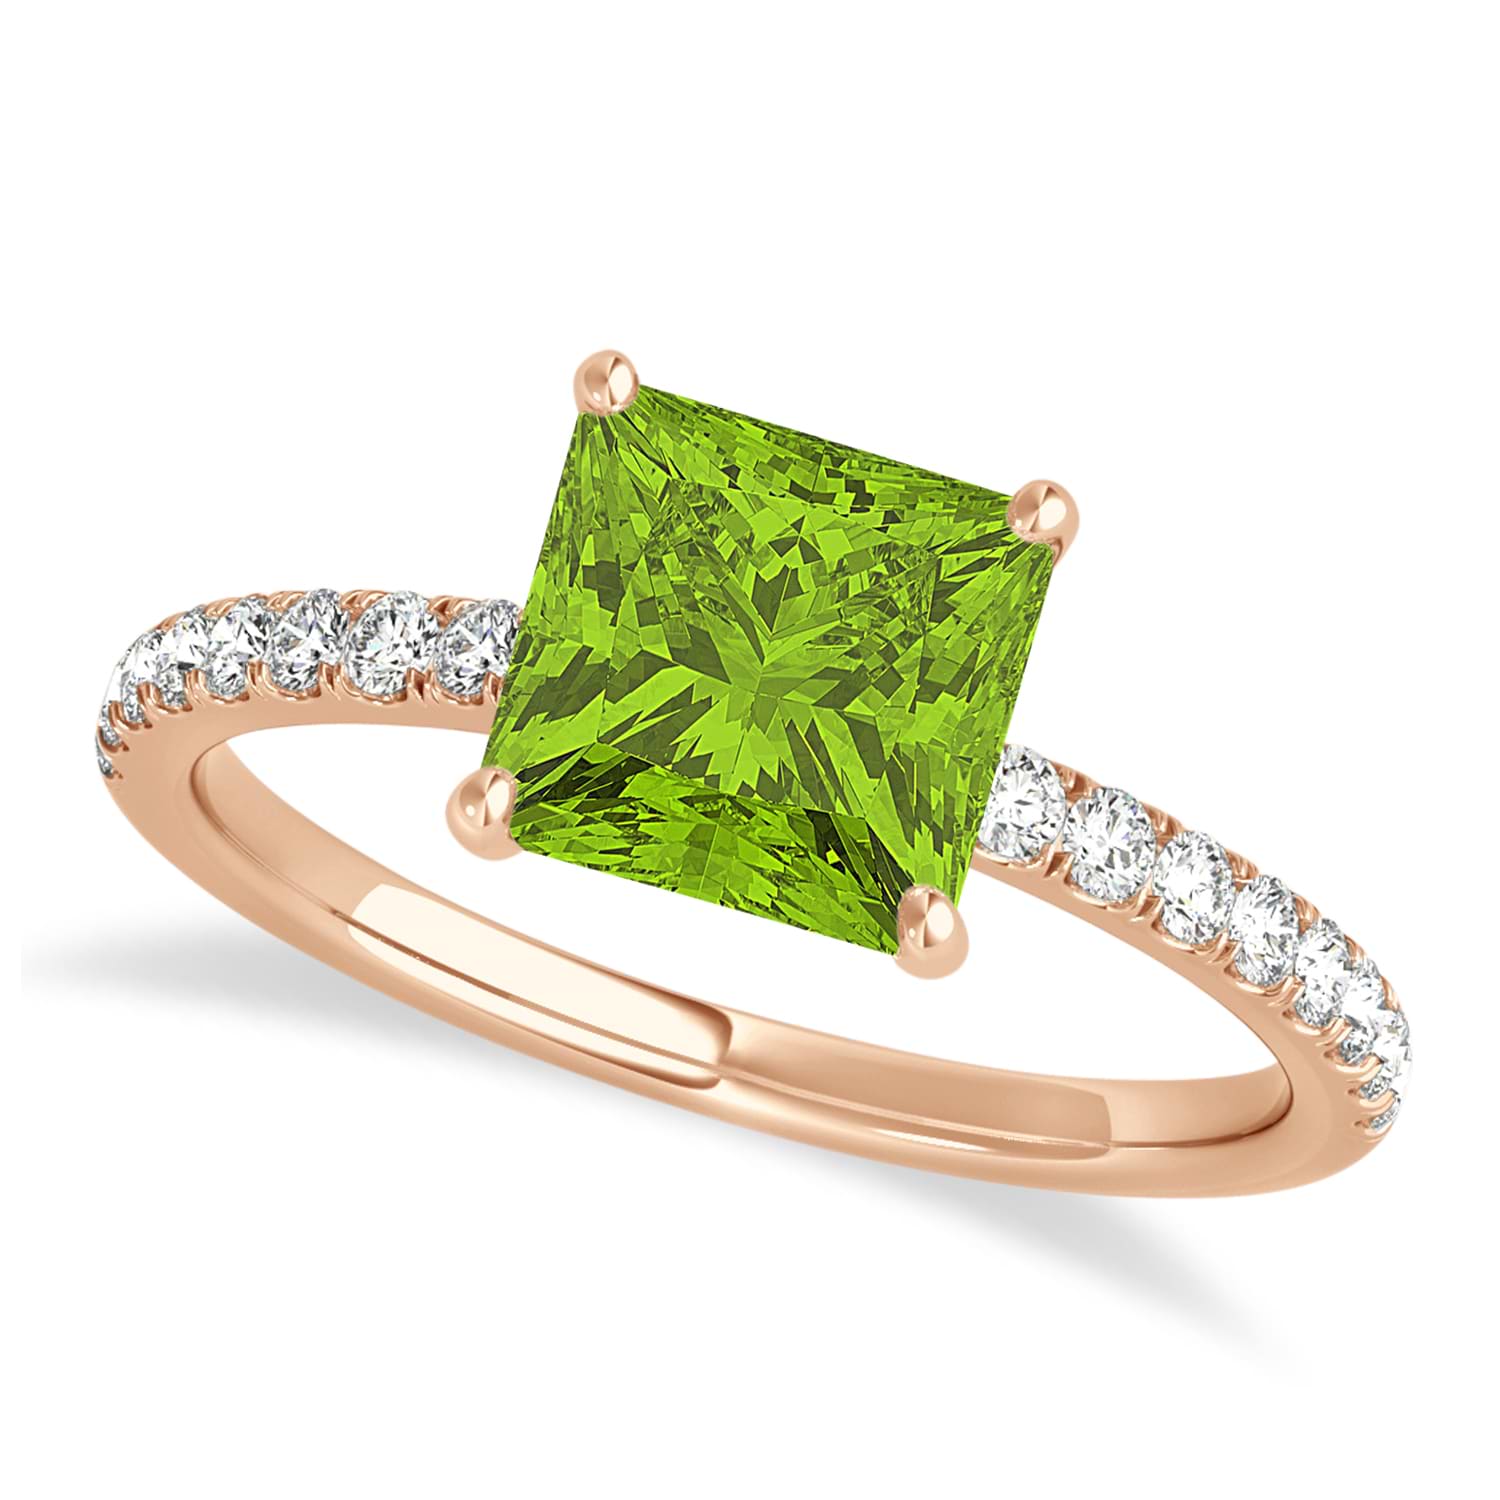 Princess Peridot & Diamond Single Row Hidden Halo Engagement Ring 18k Rose Gold (0.81ct)